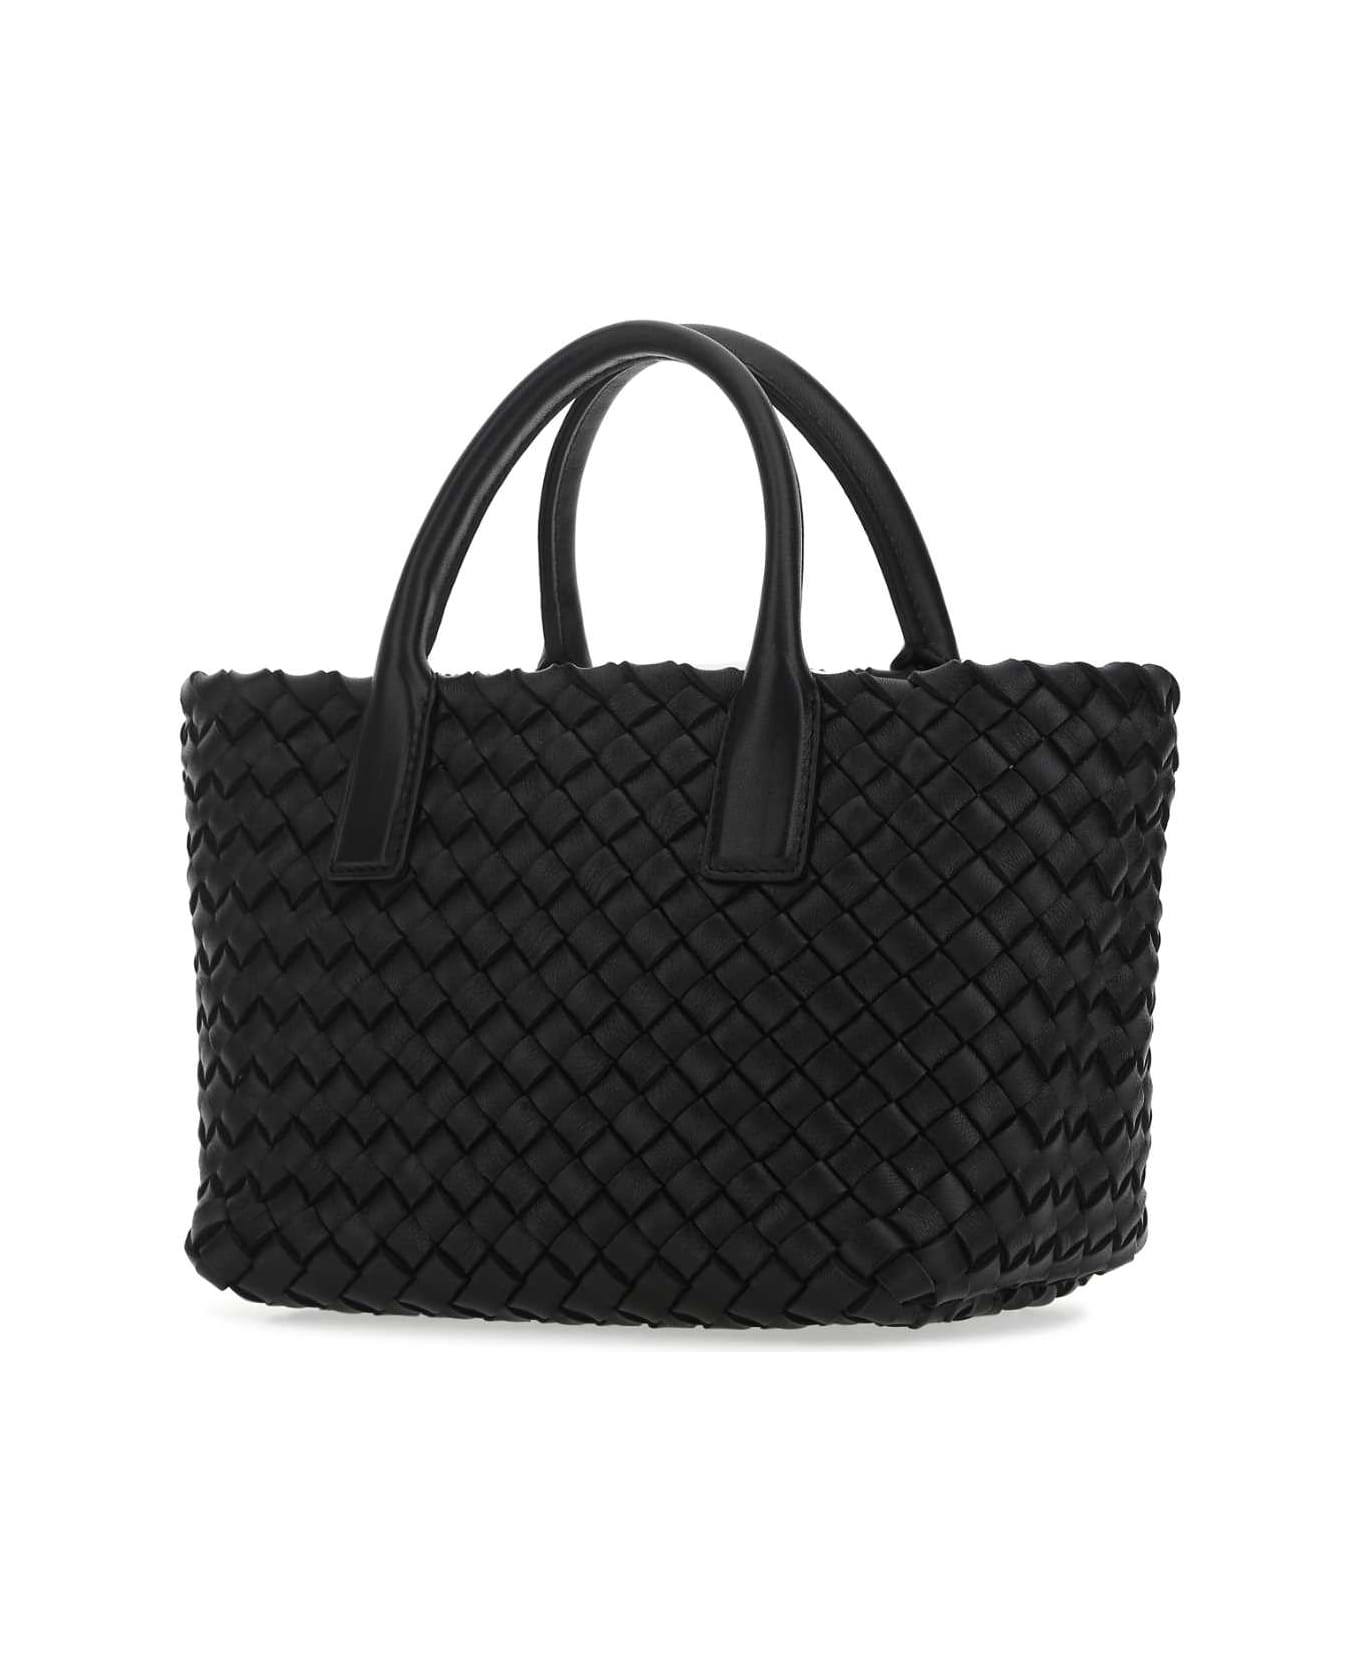 Bottega Veneta Black Leather Mini Cabat Handbag - 8425 トートバッグ